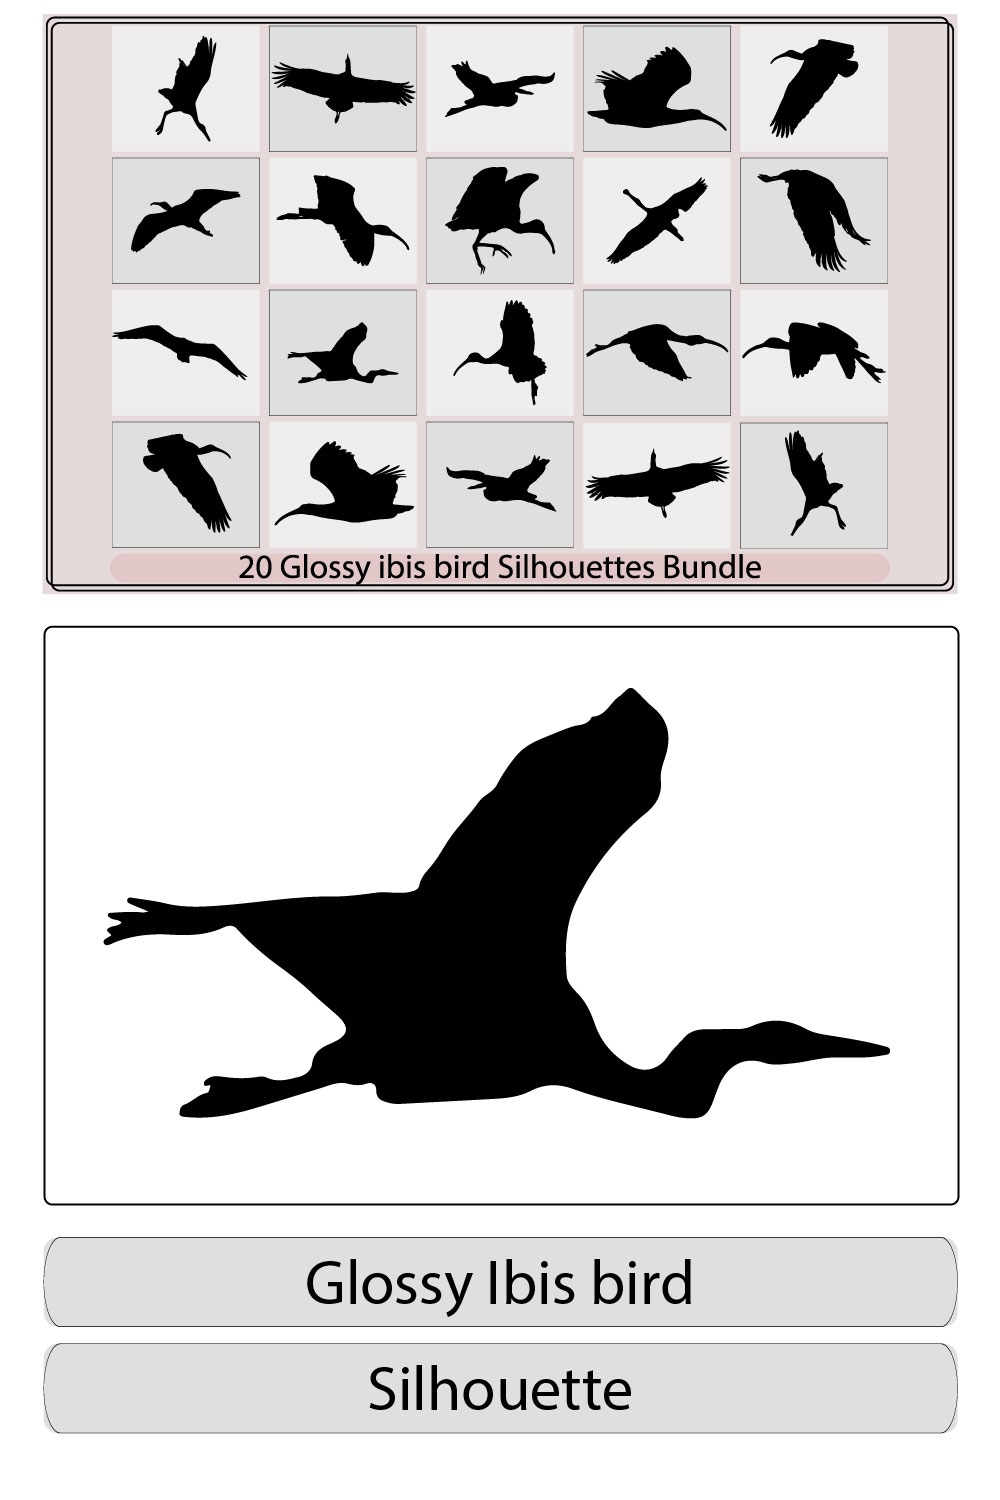 Glossy ibis bird silhouette,Glossy ibis bird silhouette bundle,Glossy ibis bird illustration,Glossy ibis bird vector, pinterest preview image.